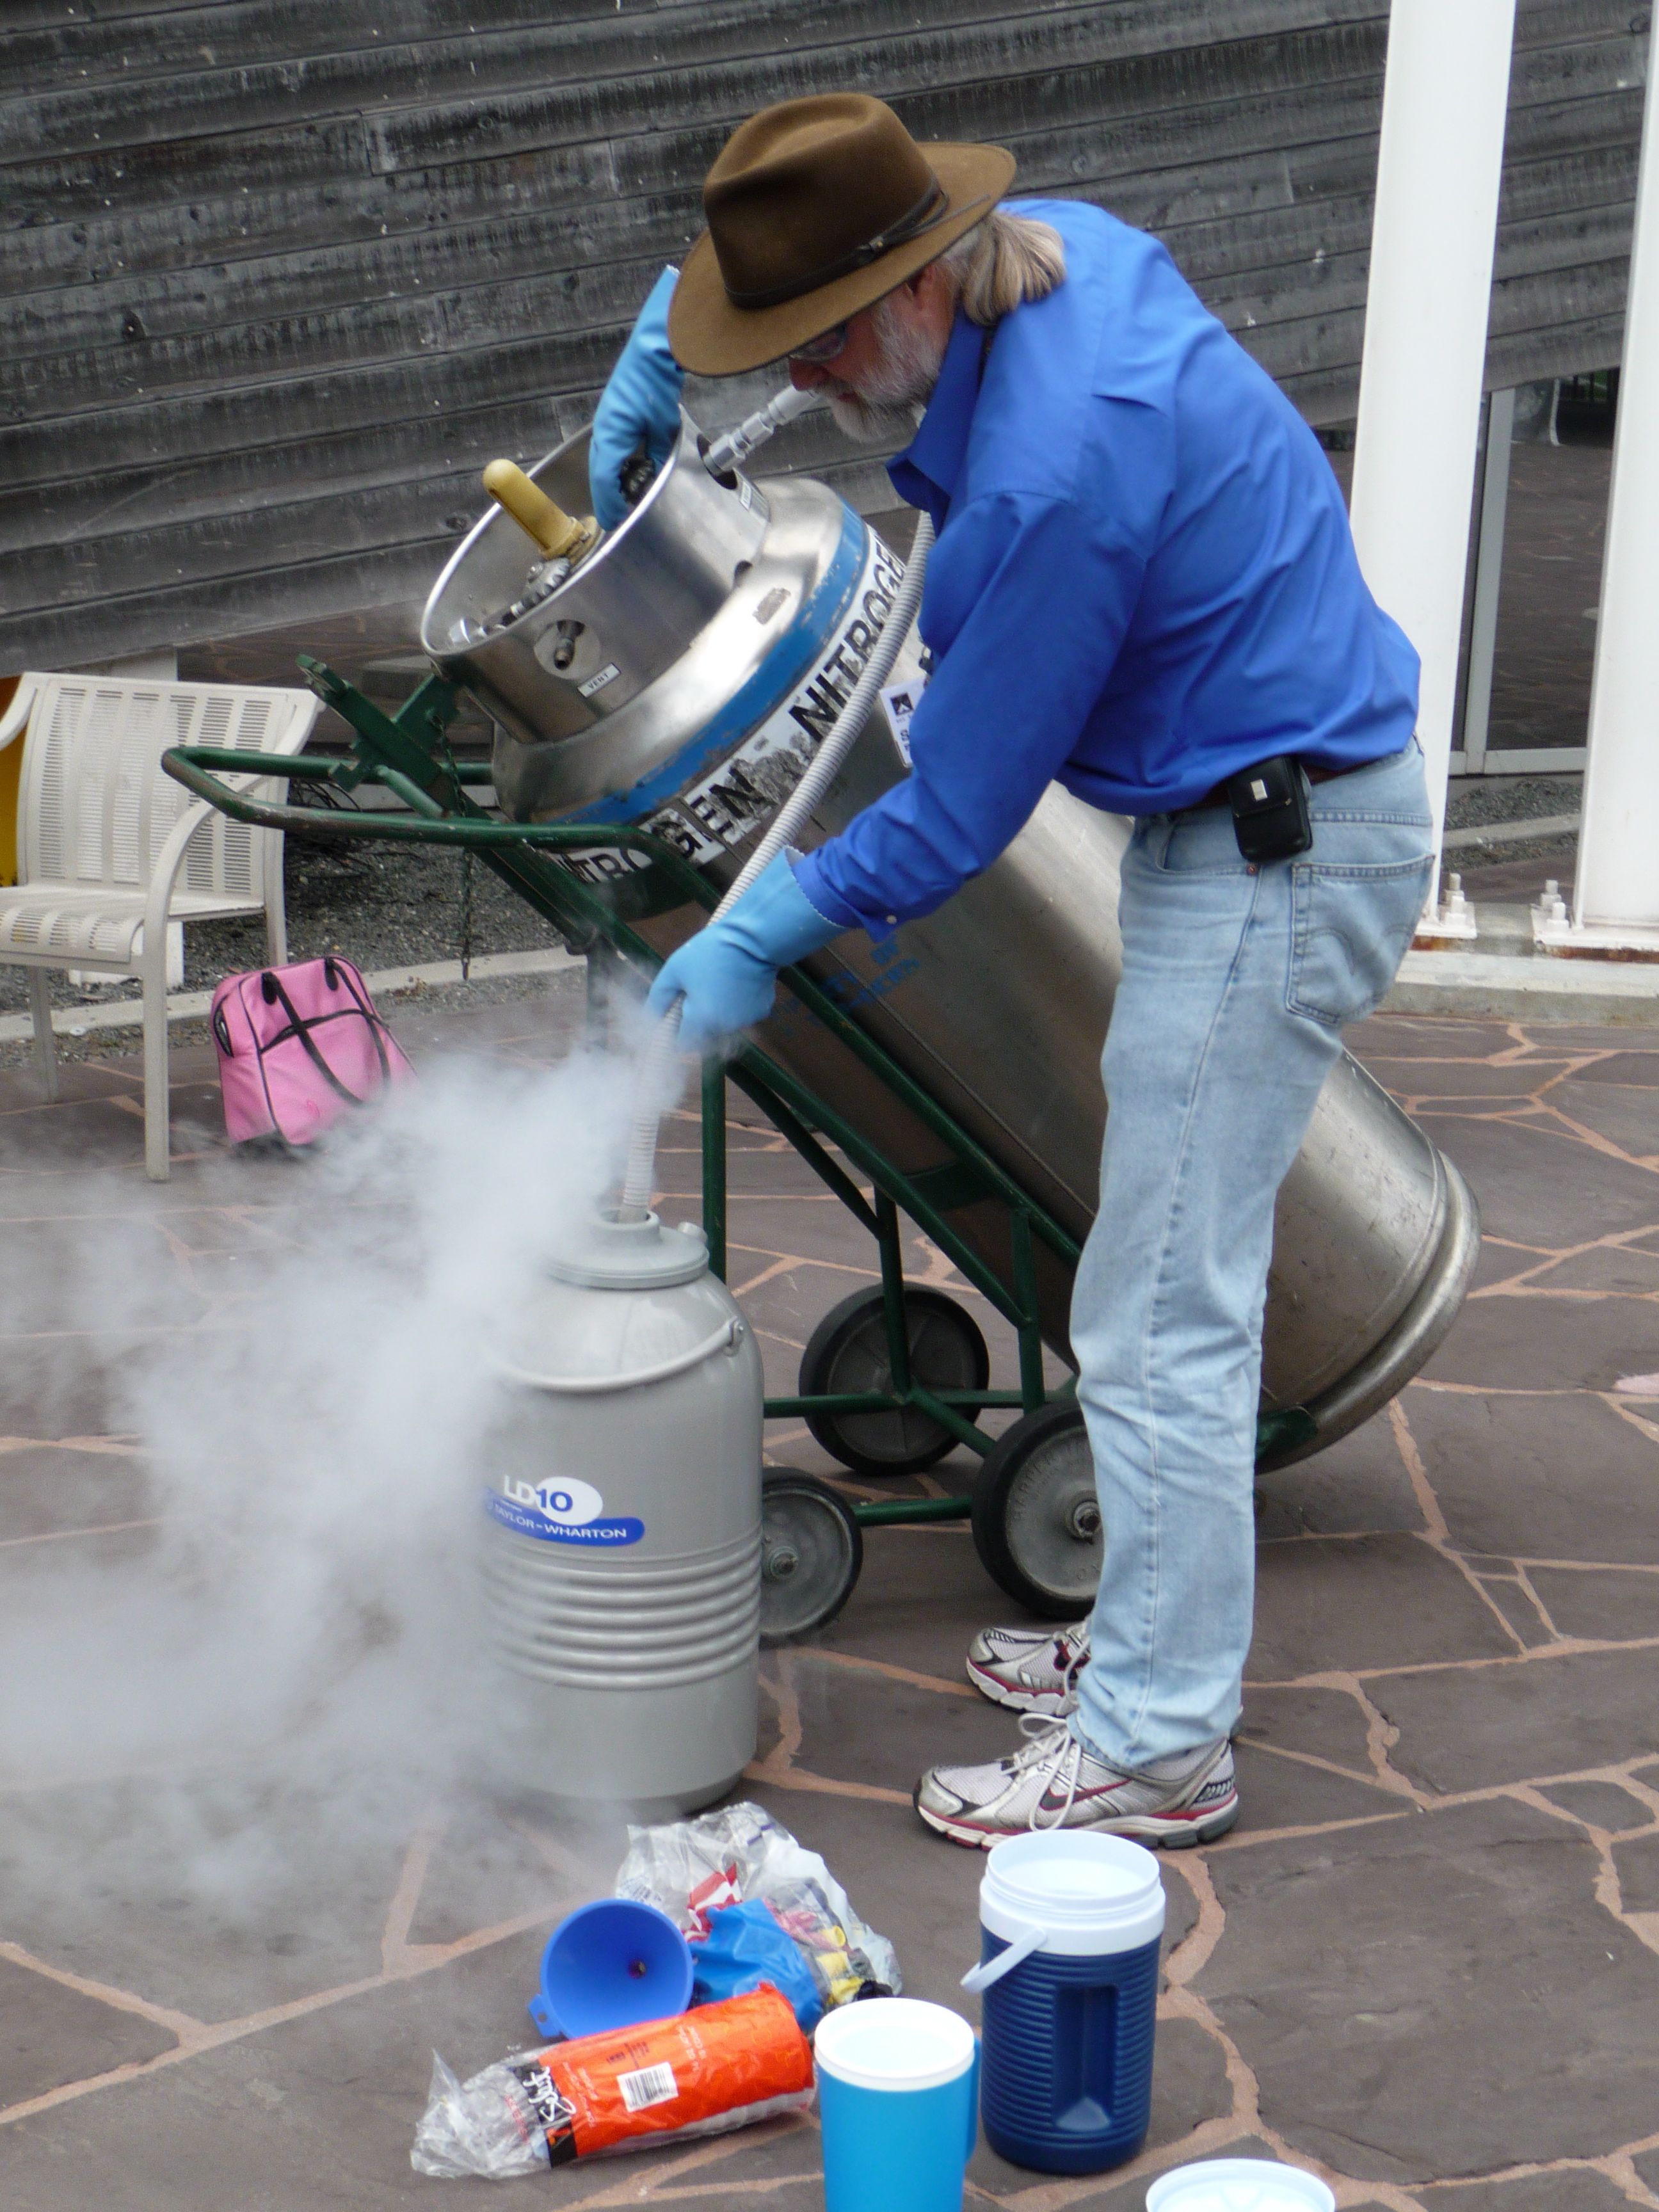 Simon Field making ice cream with liquid nitrogen